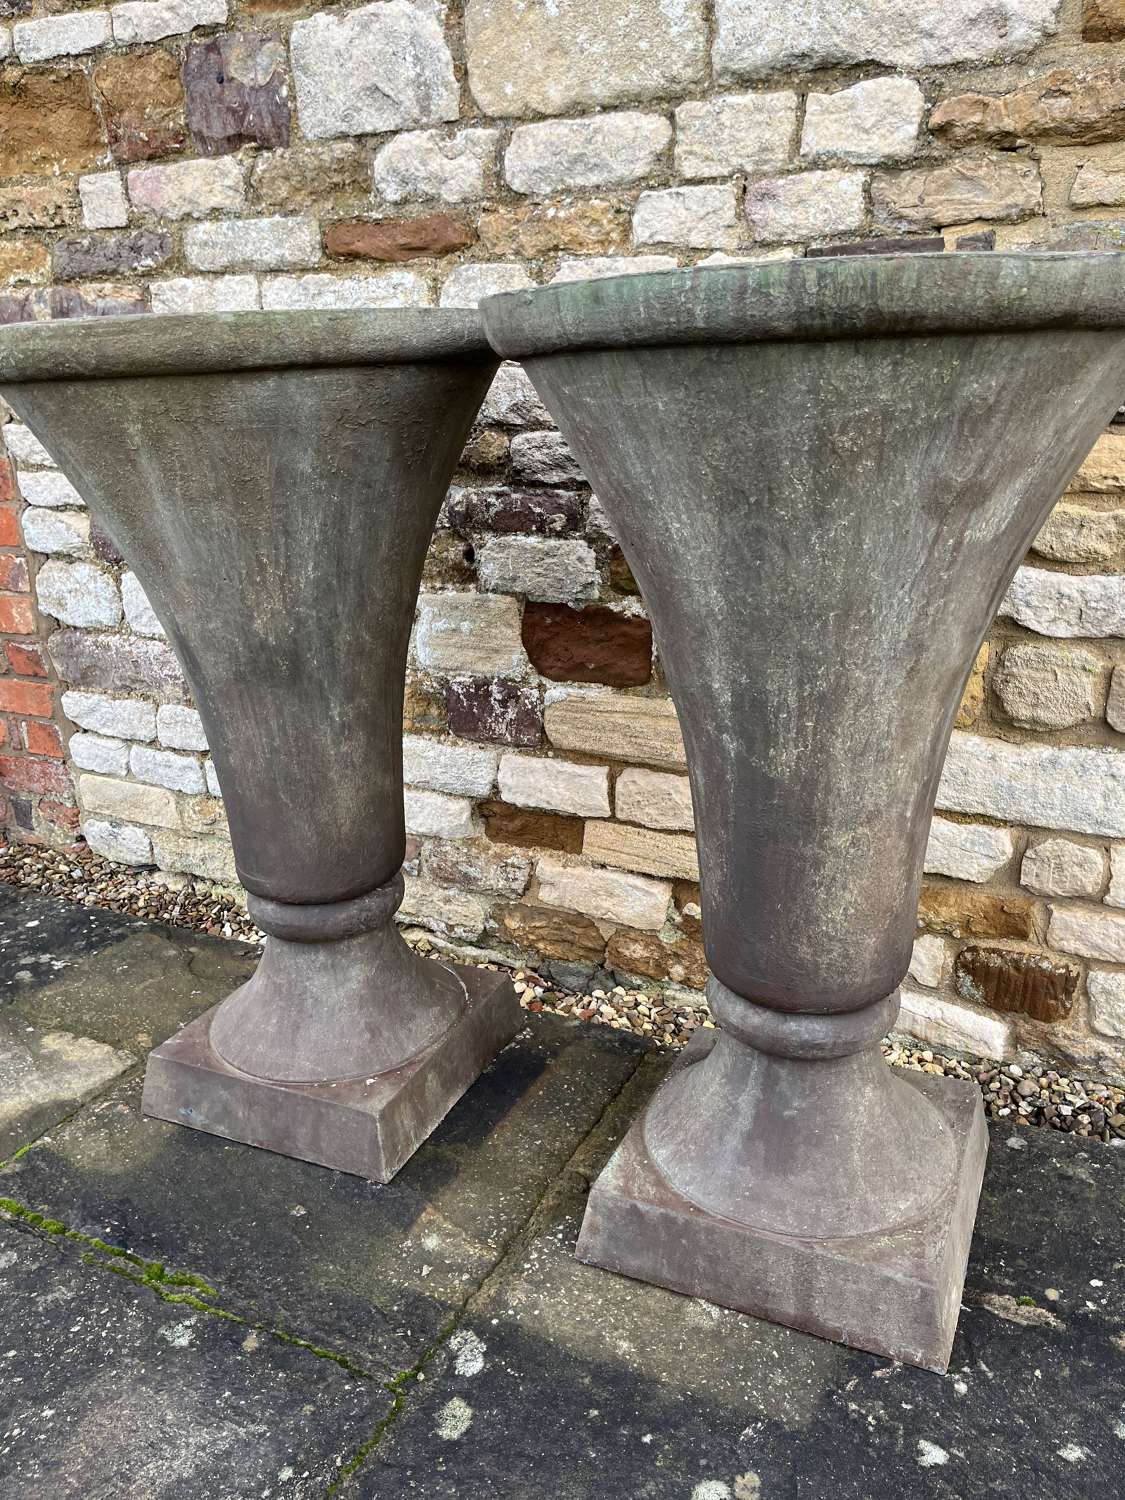 Pair of cast iron vases - cast iron urns 90 cm tall